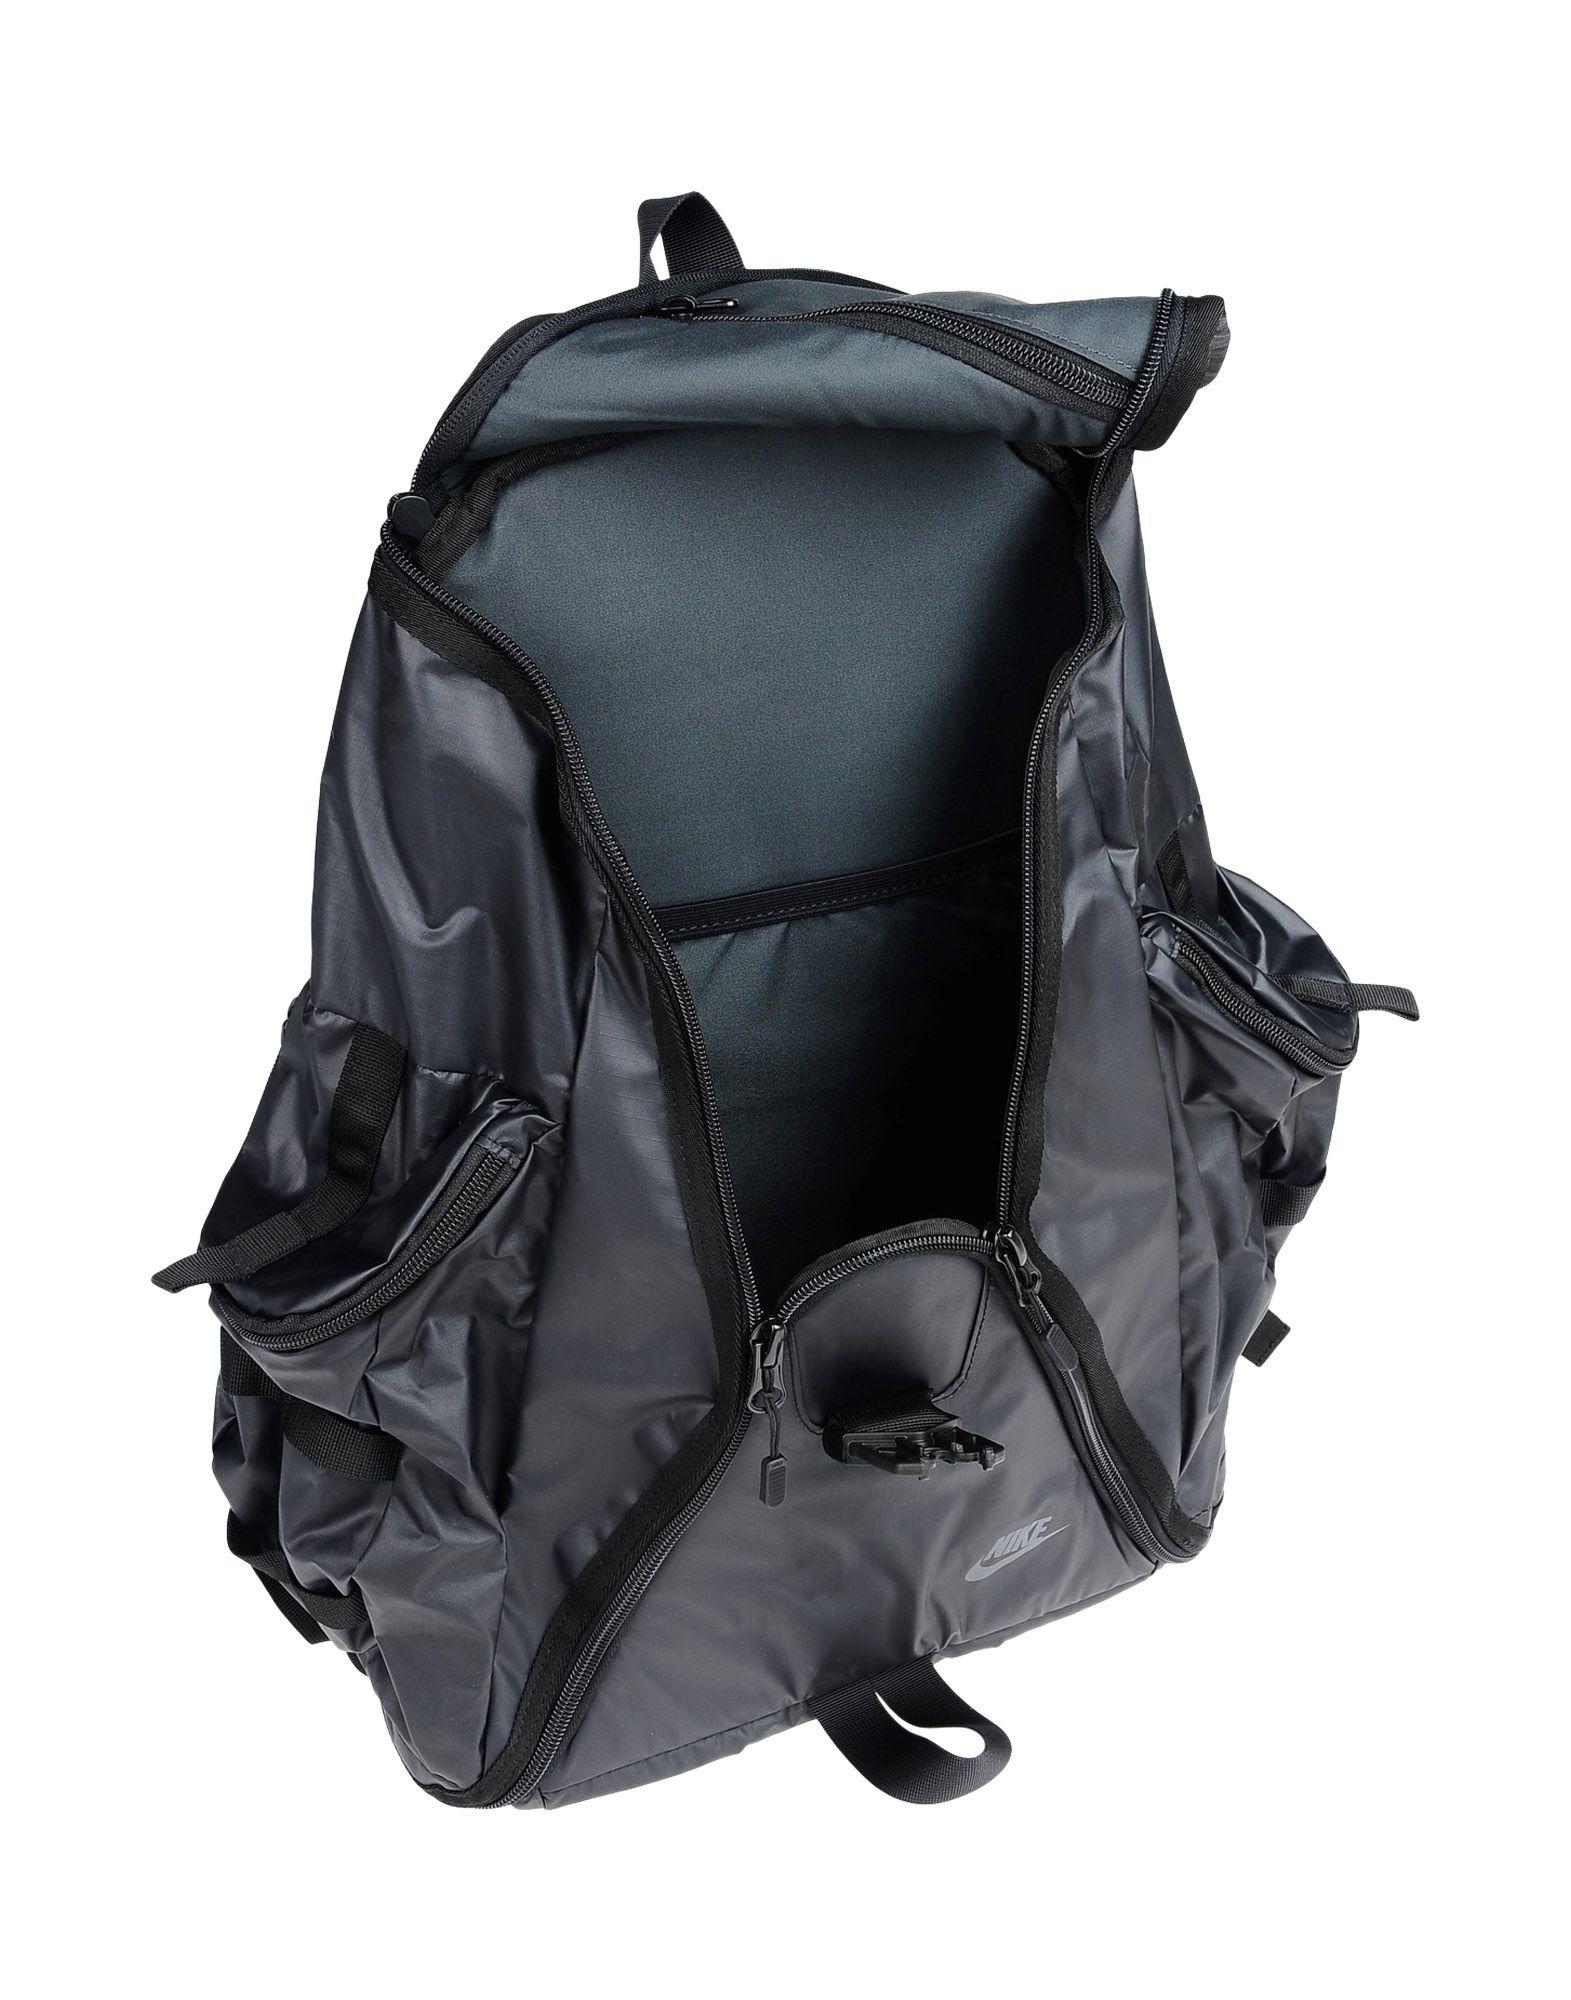 Nike Synthetic Backpacks & Fanny Packs in Black for Men - Lyst